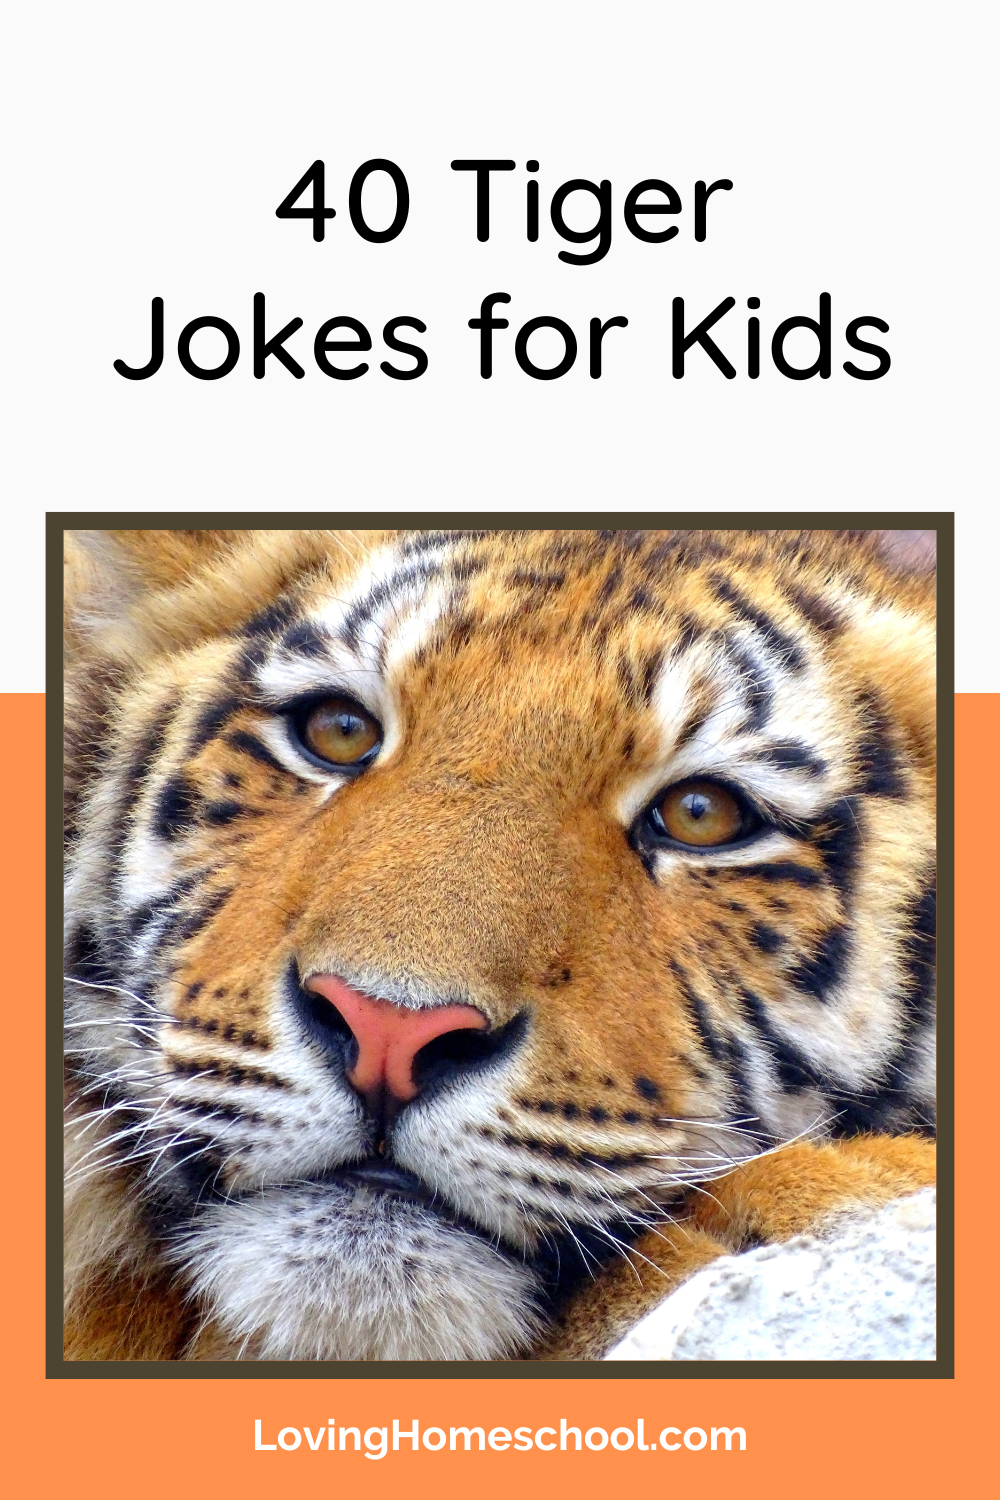 40 Tiger Jokes for Kids Pinterest Pin